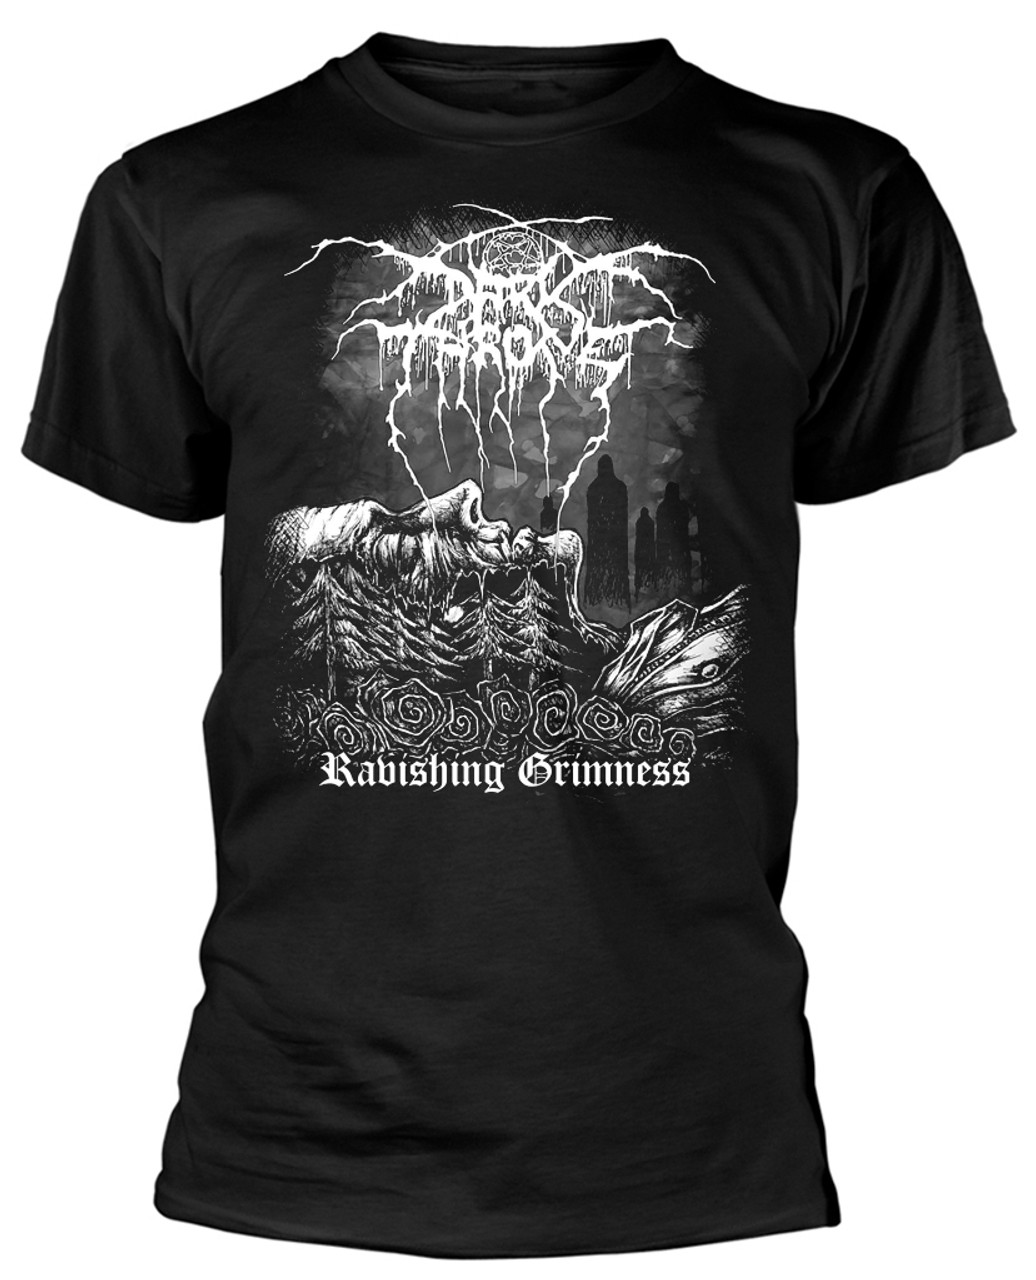 Darkthrone 'Ravishing Grimness' (Black) T-Shirt